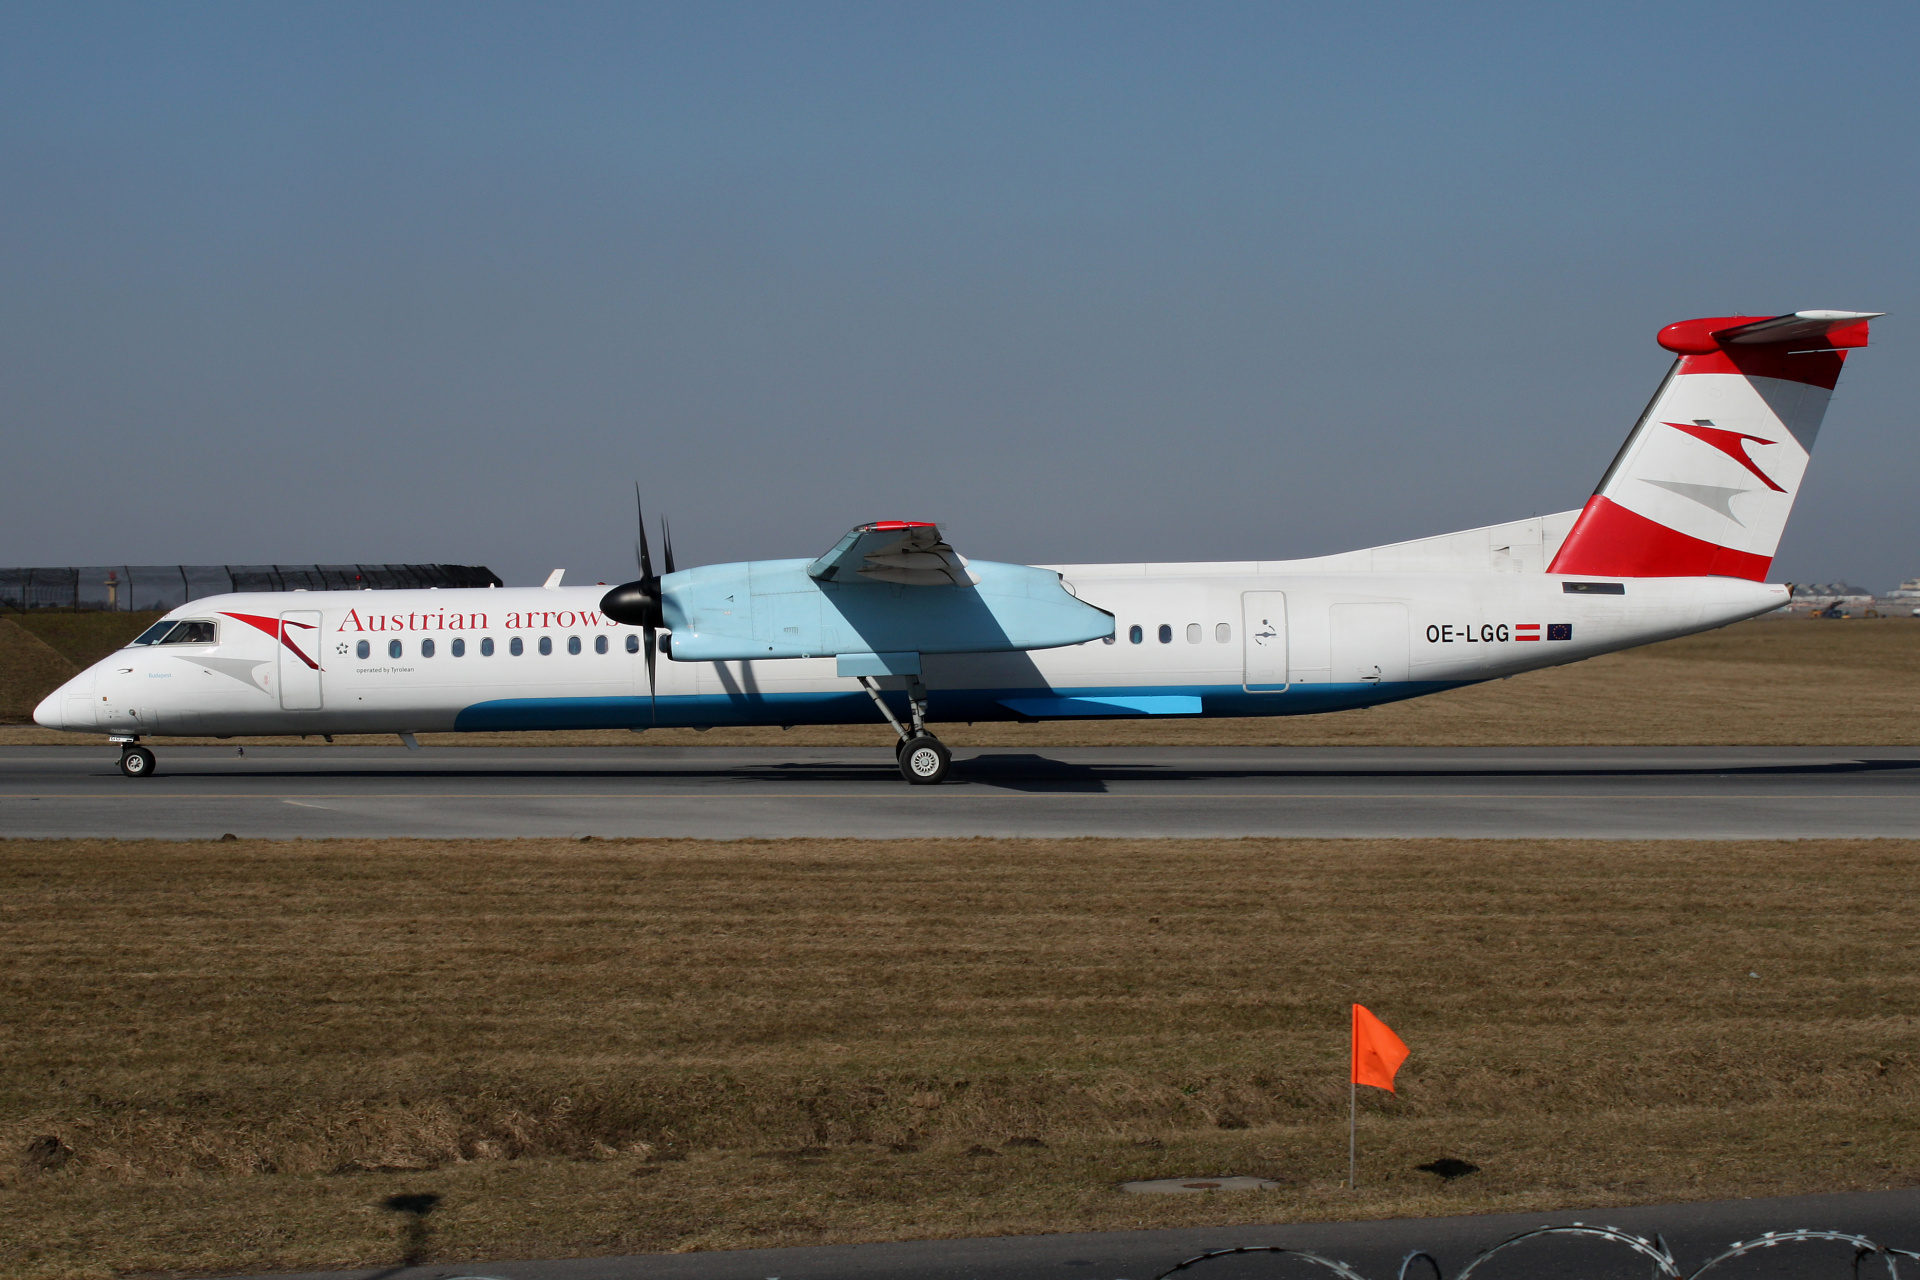 OE-LGG, Austrian arrows (Tyrolean) (Aircraft » EPWA Spotting » De Havilland Canada DHC-8 Dash 8 » Austrian Airlines)